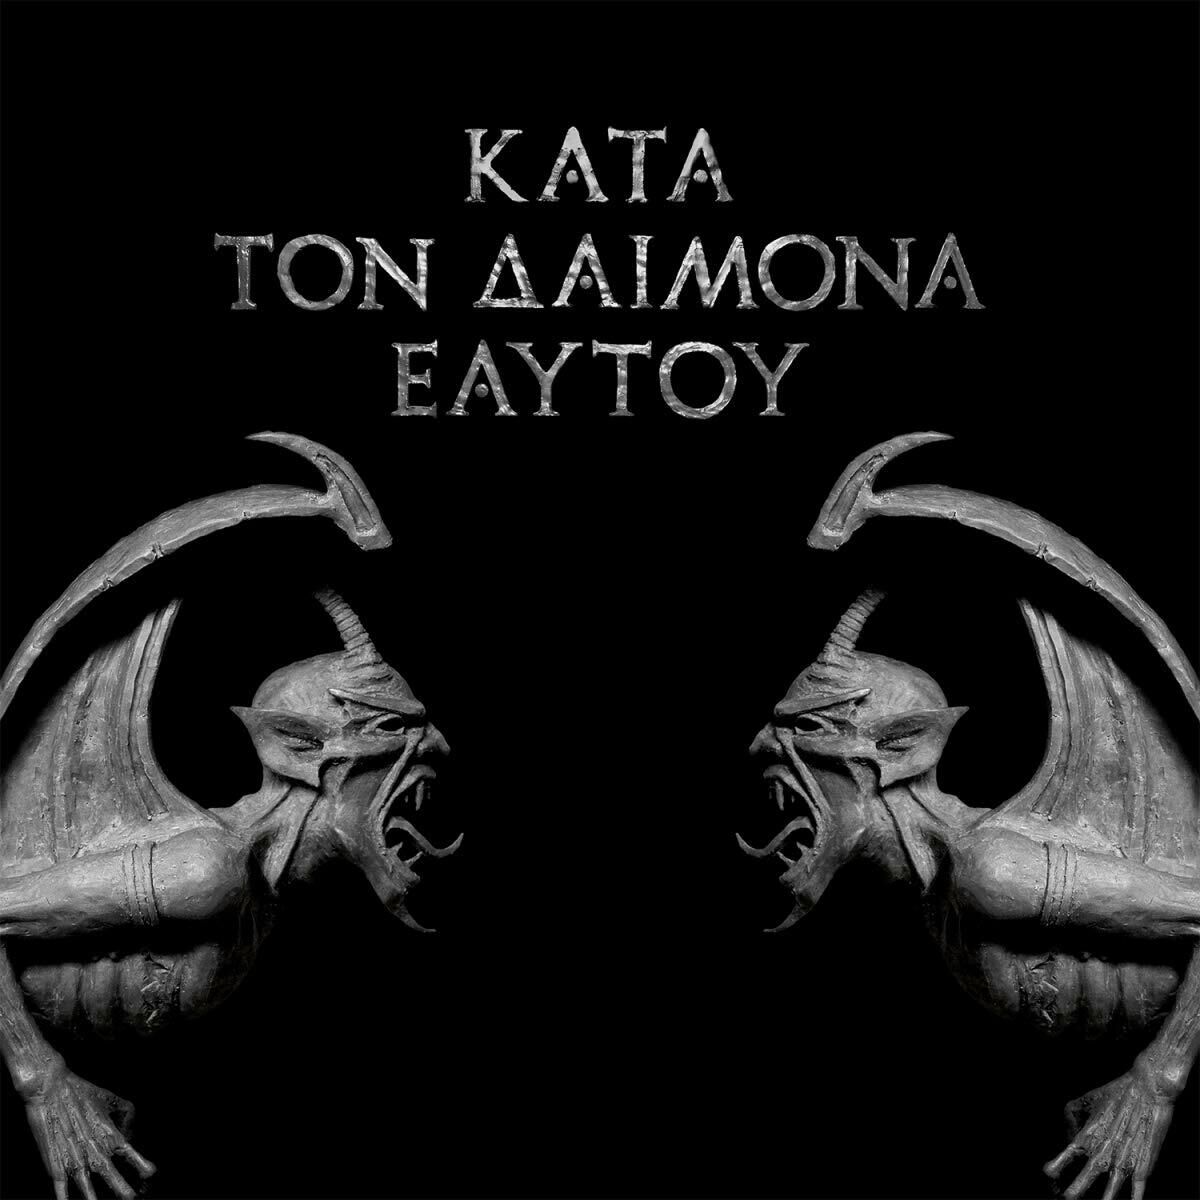 ROTTING CHRIST - Kata Ton Daimona Eaytoy [GOLD DLP]